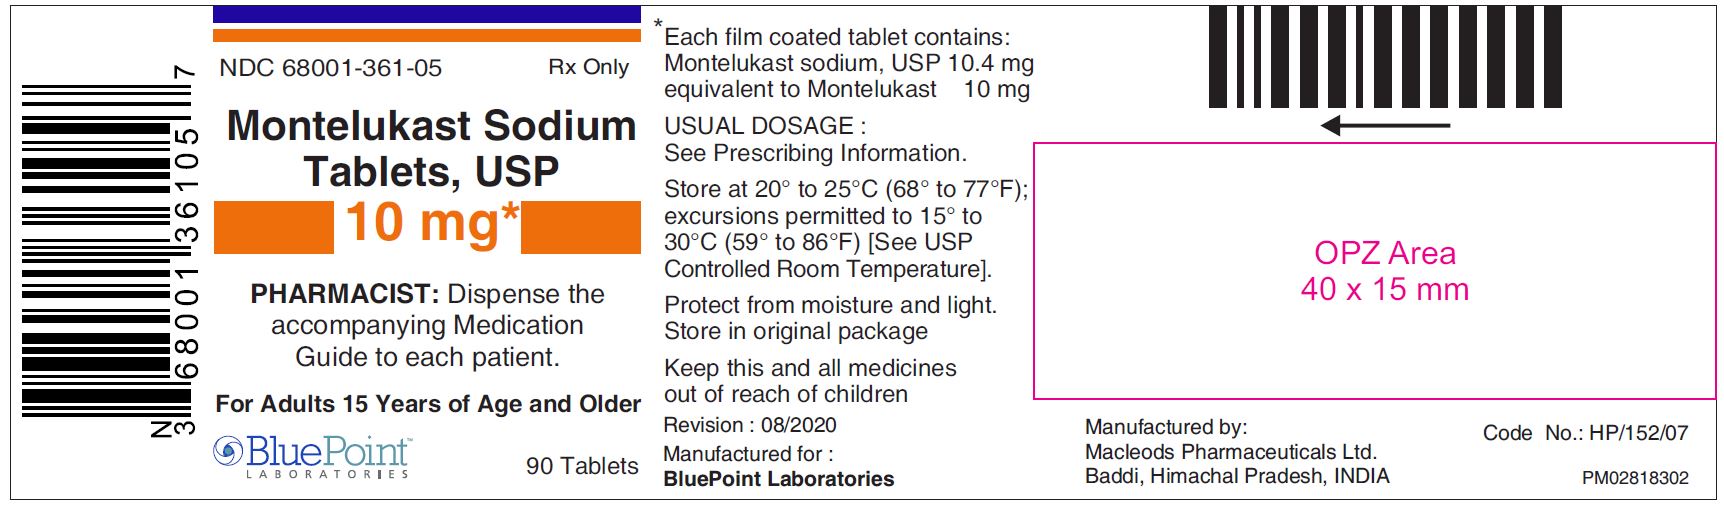 Montelukast Sodium Tablets, USP 10 mg 90 ct